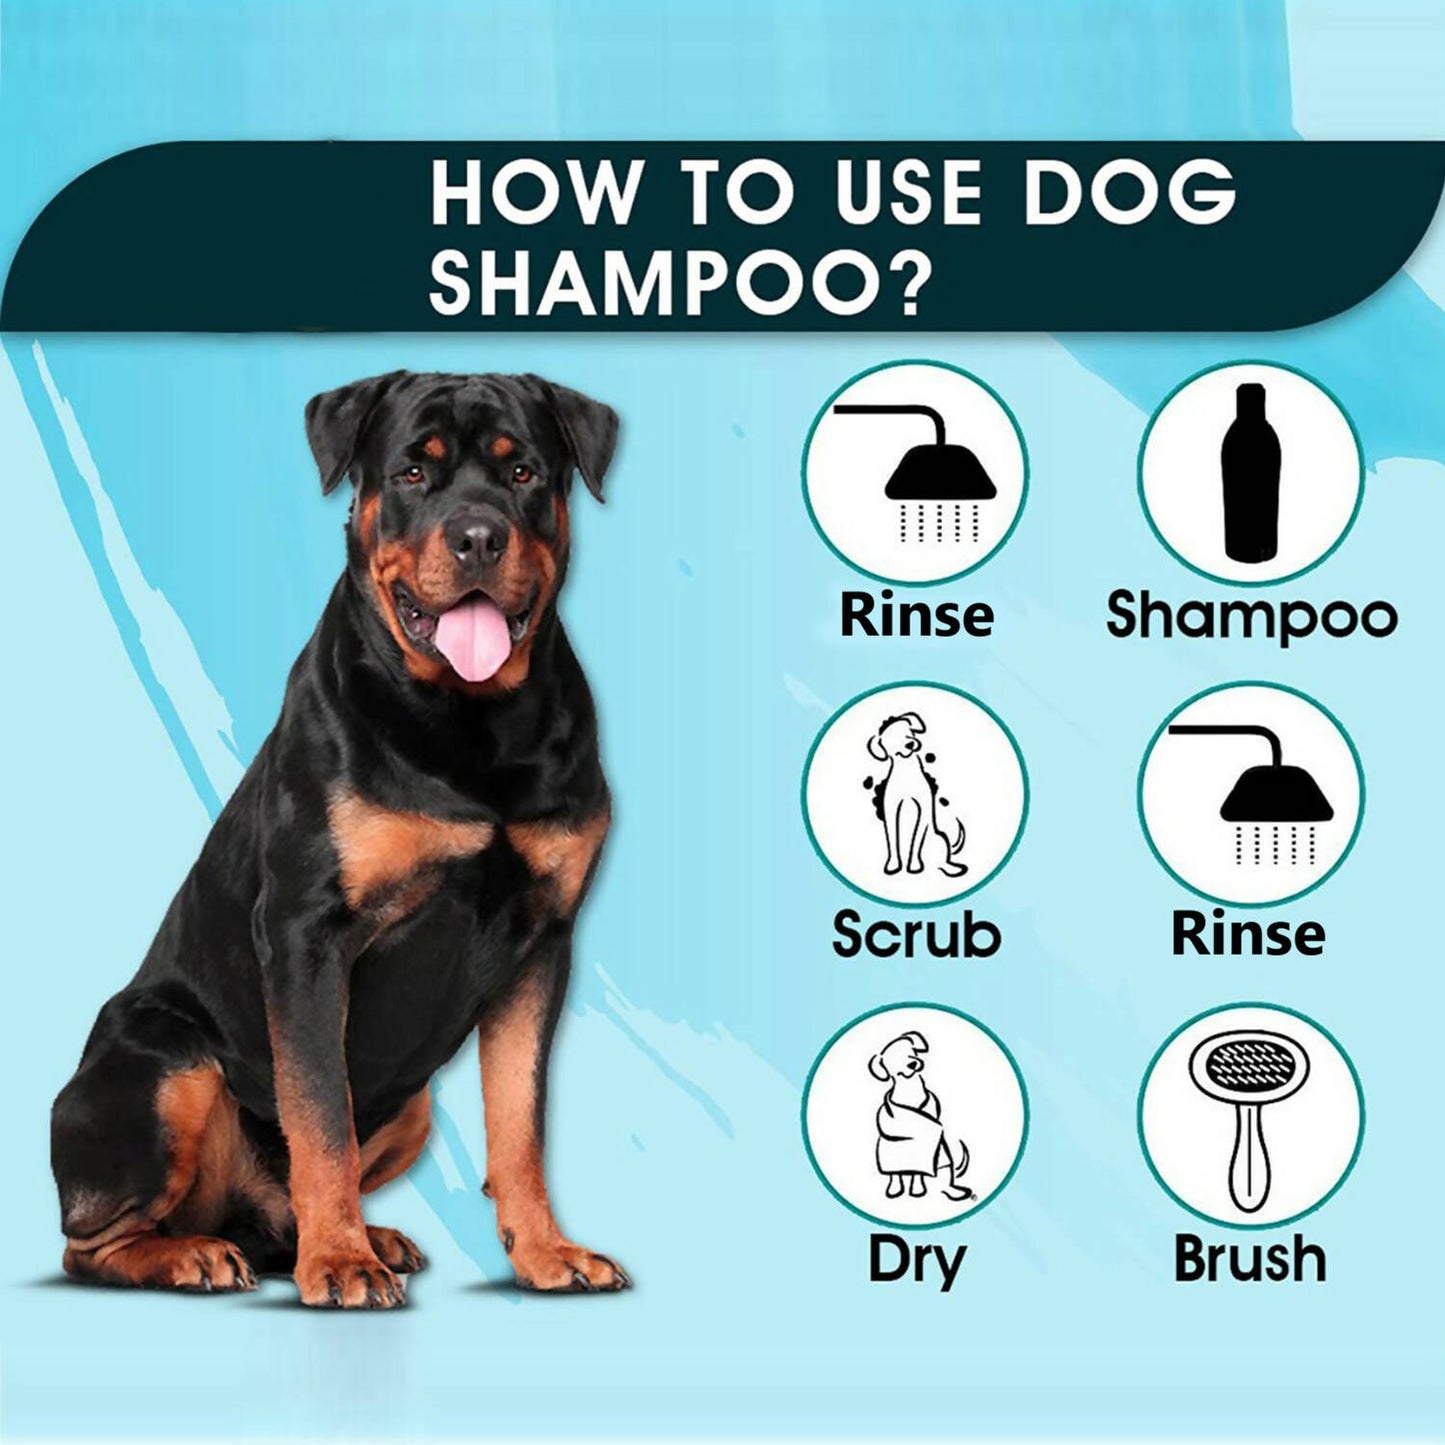 Basil - Anti Dandruff and Anti-Itch Shampoo For Dogs